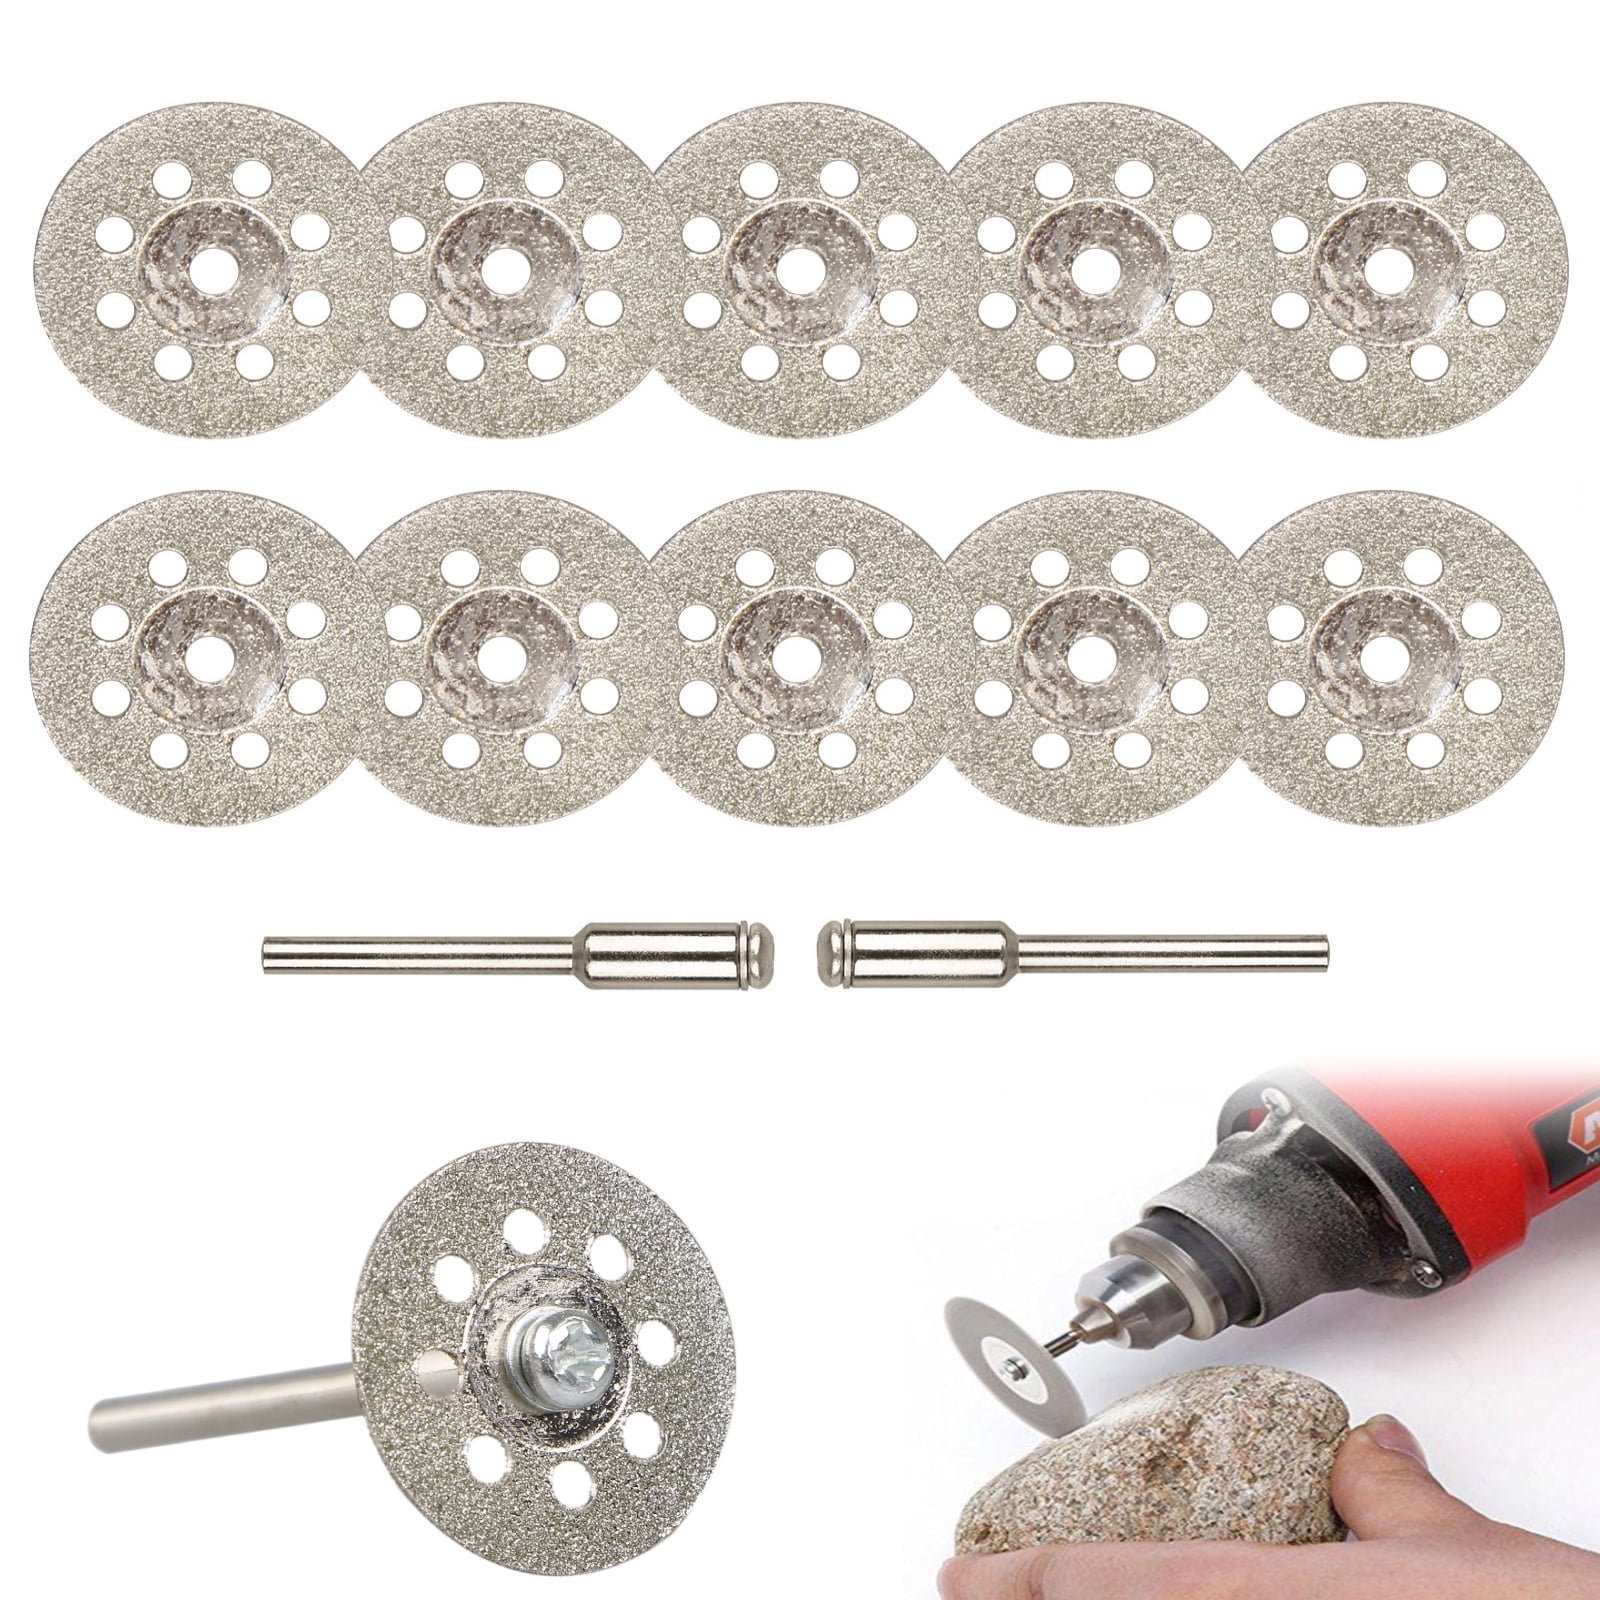 10pcs Diamond Cutting Discs Cutting Grinding Tools for Tiles,Carbide,Rocks,Glass